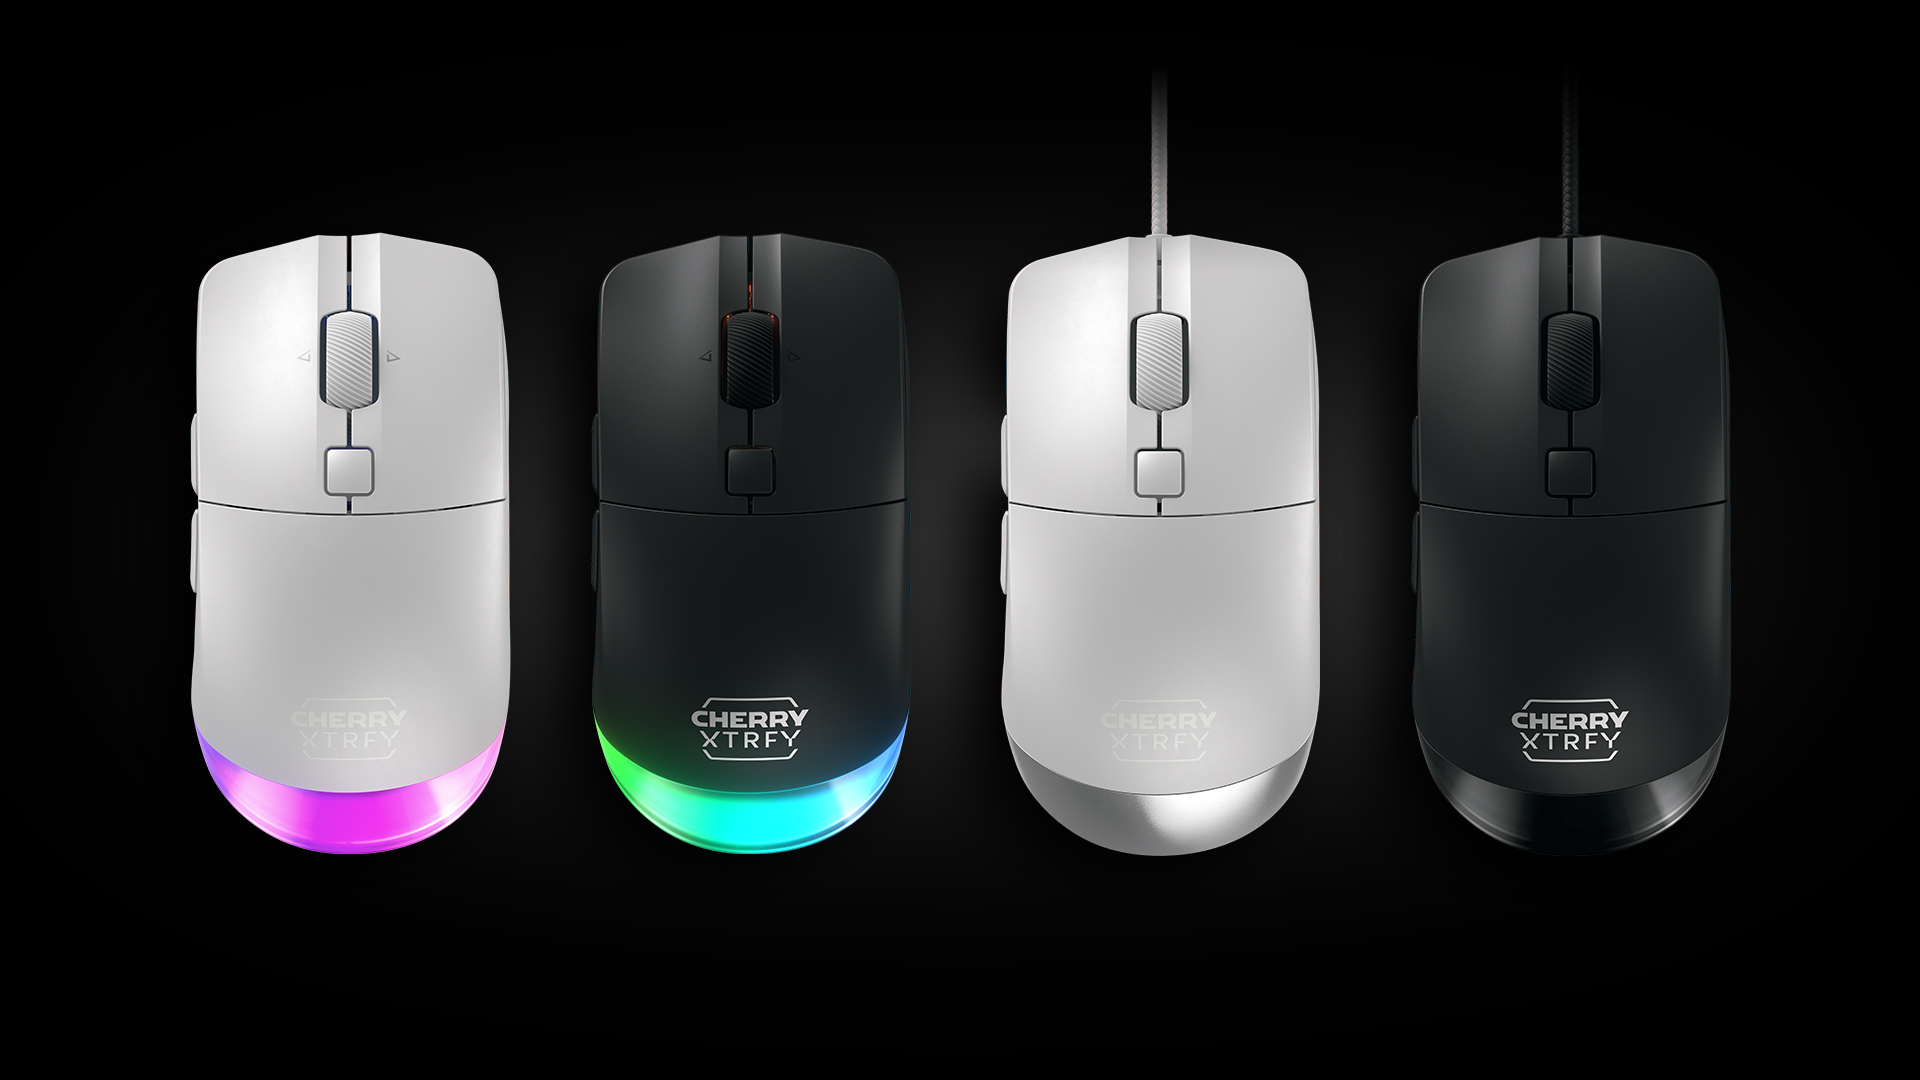 CHERRY XTRFY M50 mouse series